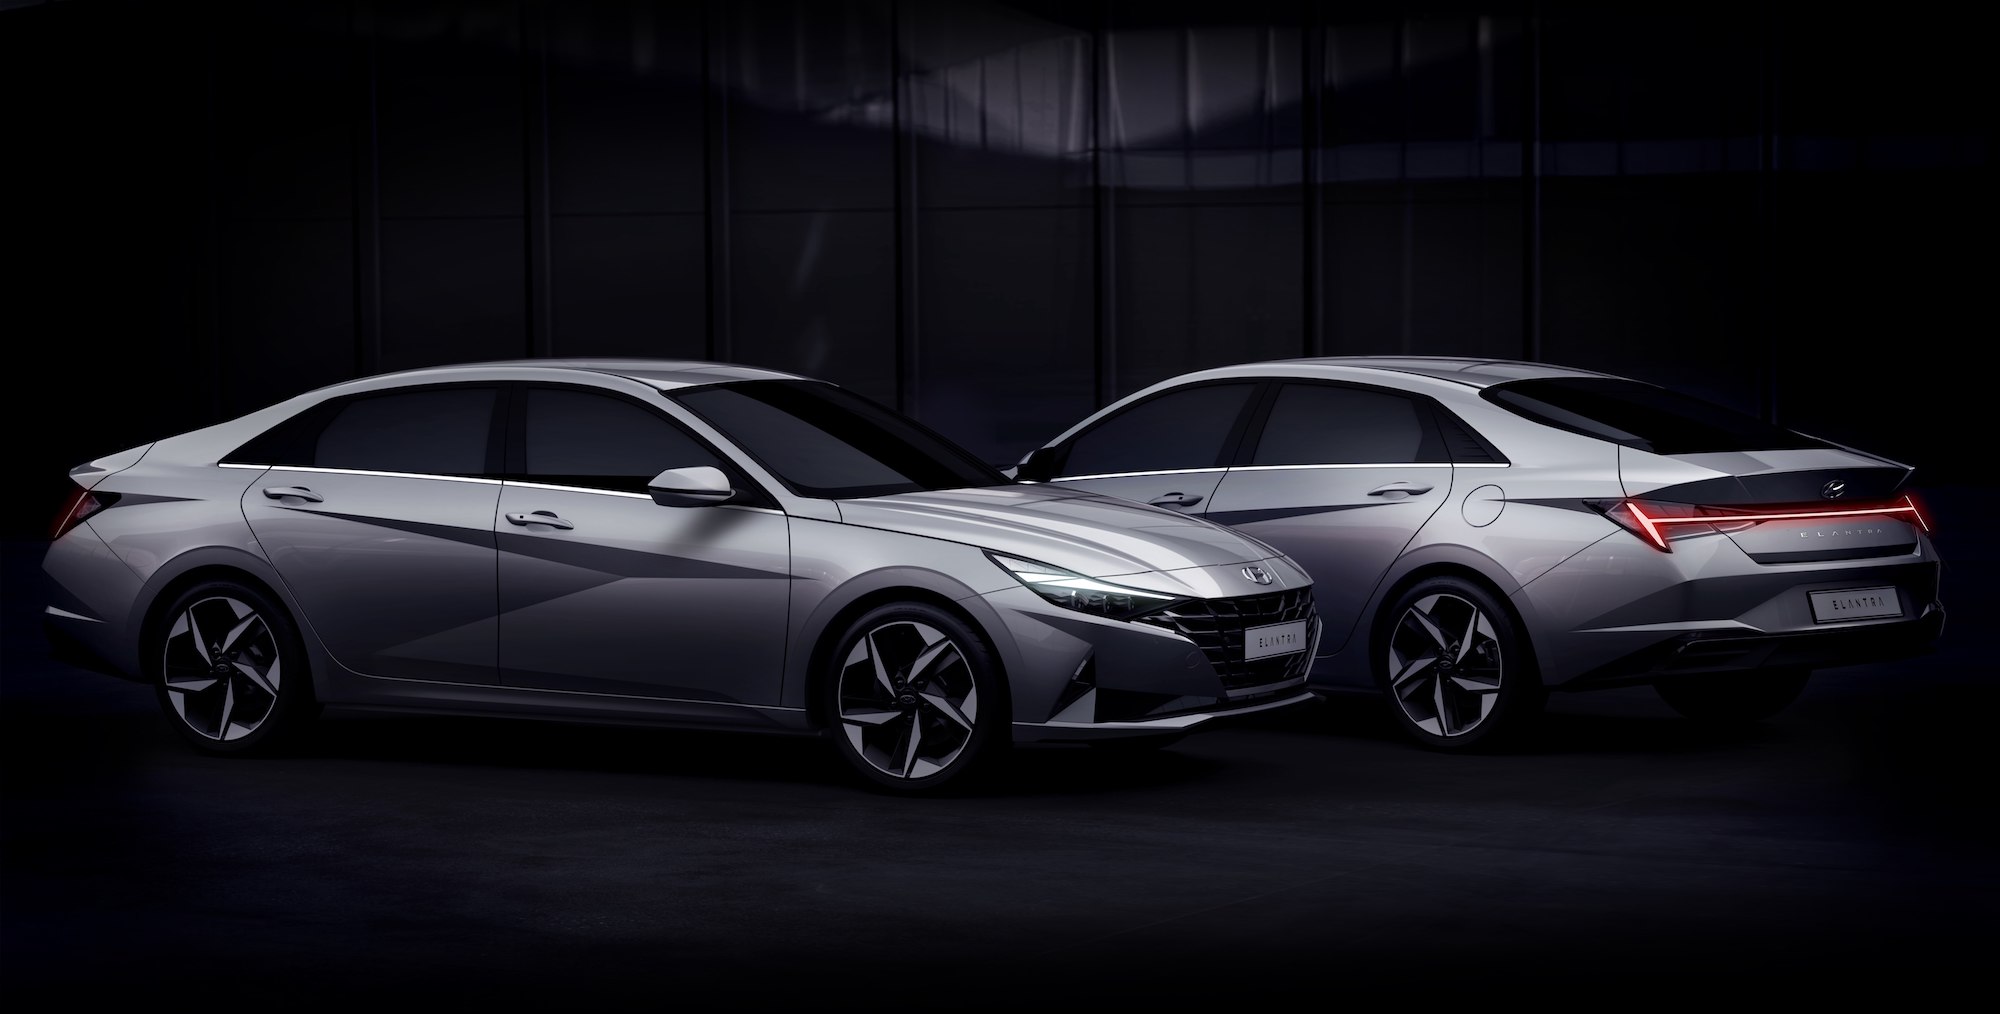 2 silver Hyundai Elantra sedans parked in the dark